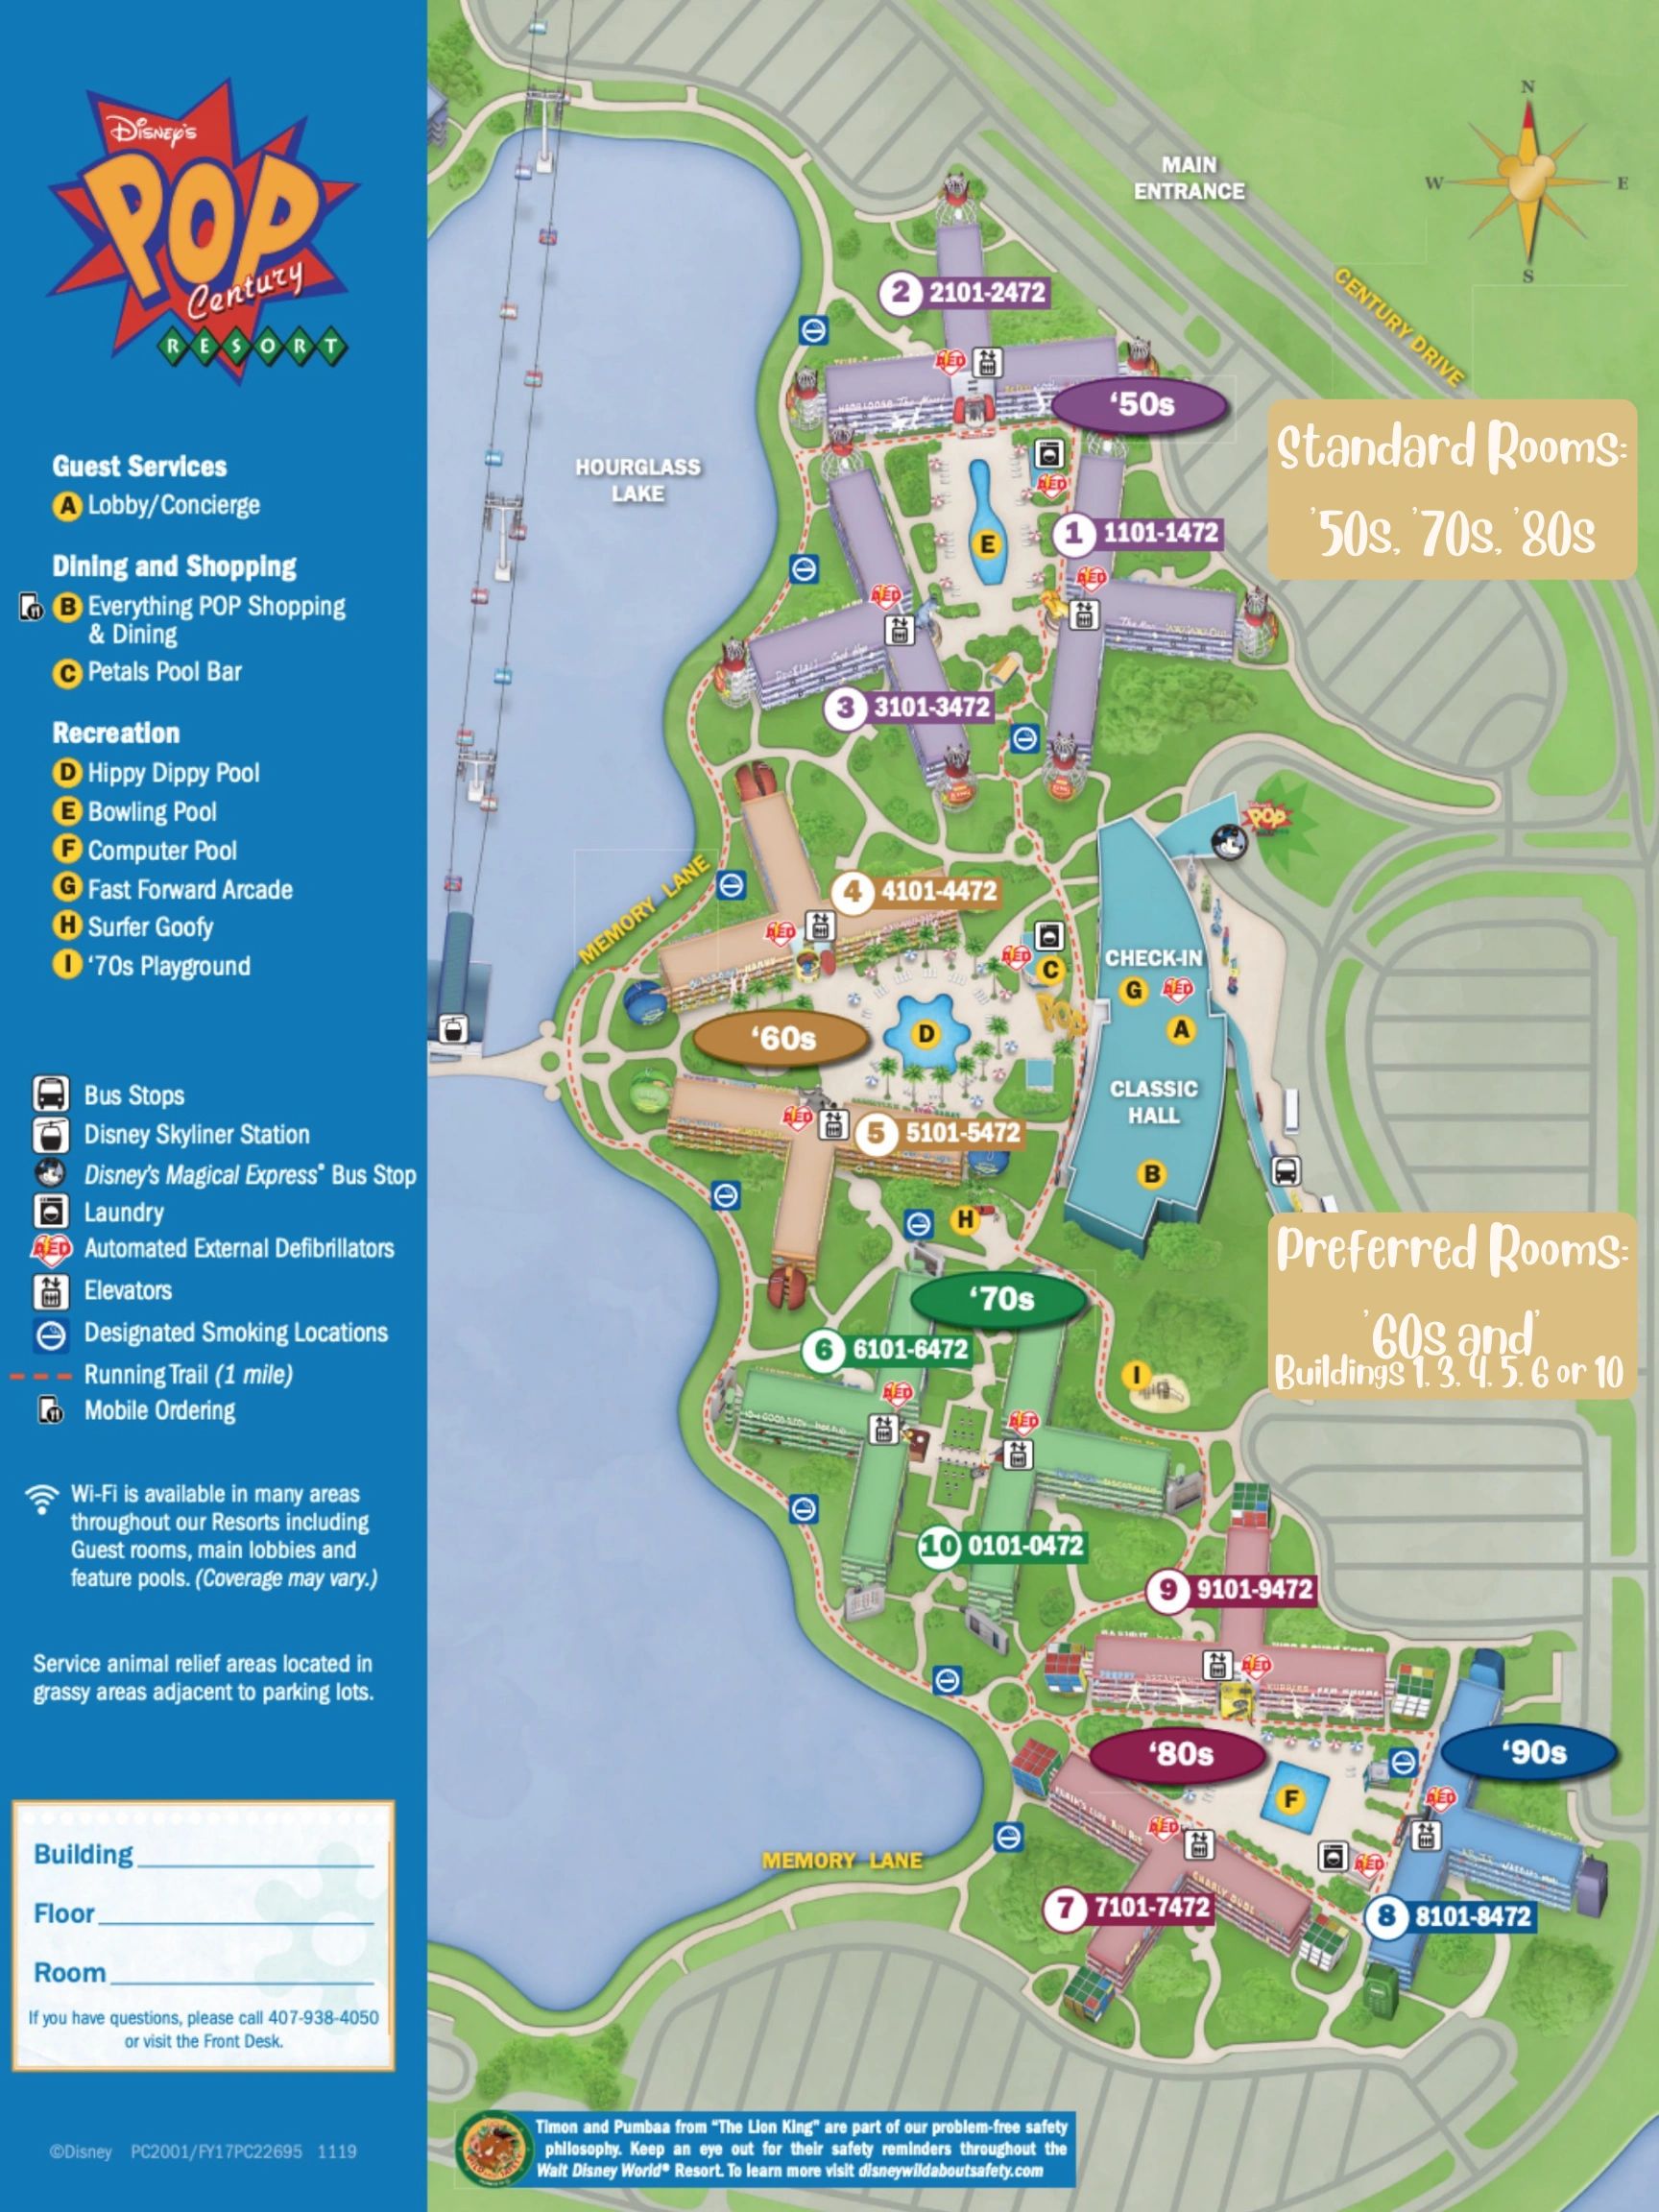 Disney's Pop Century Resort Map